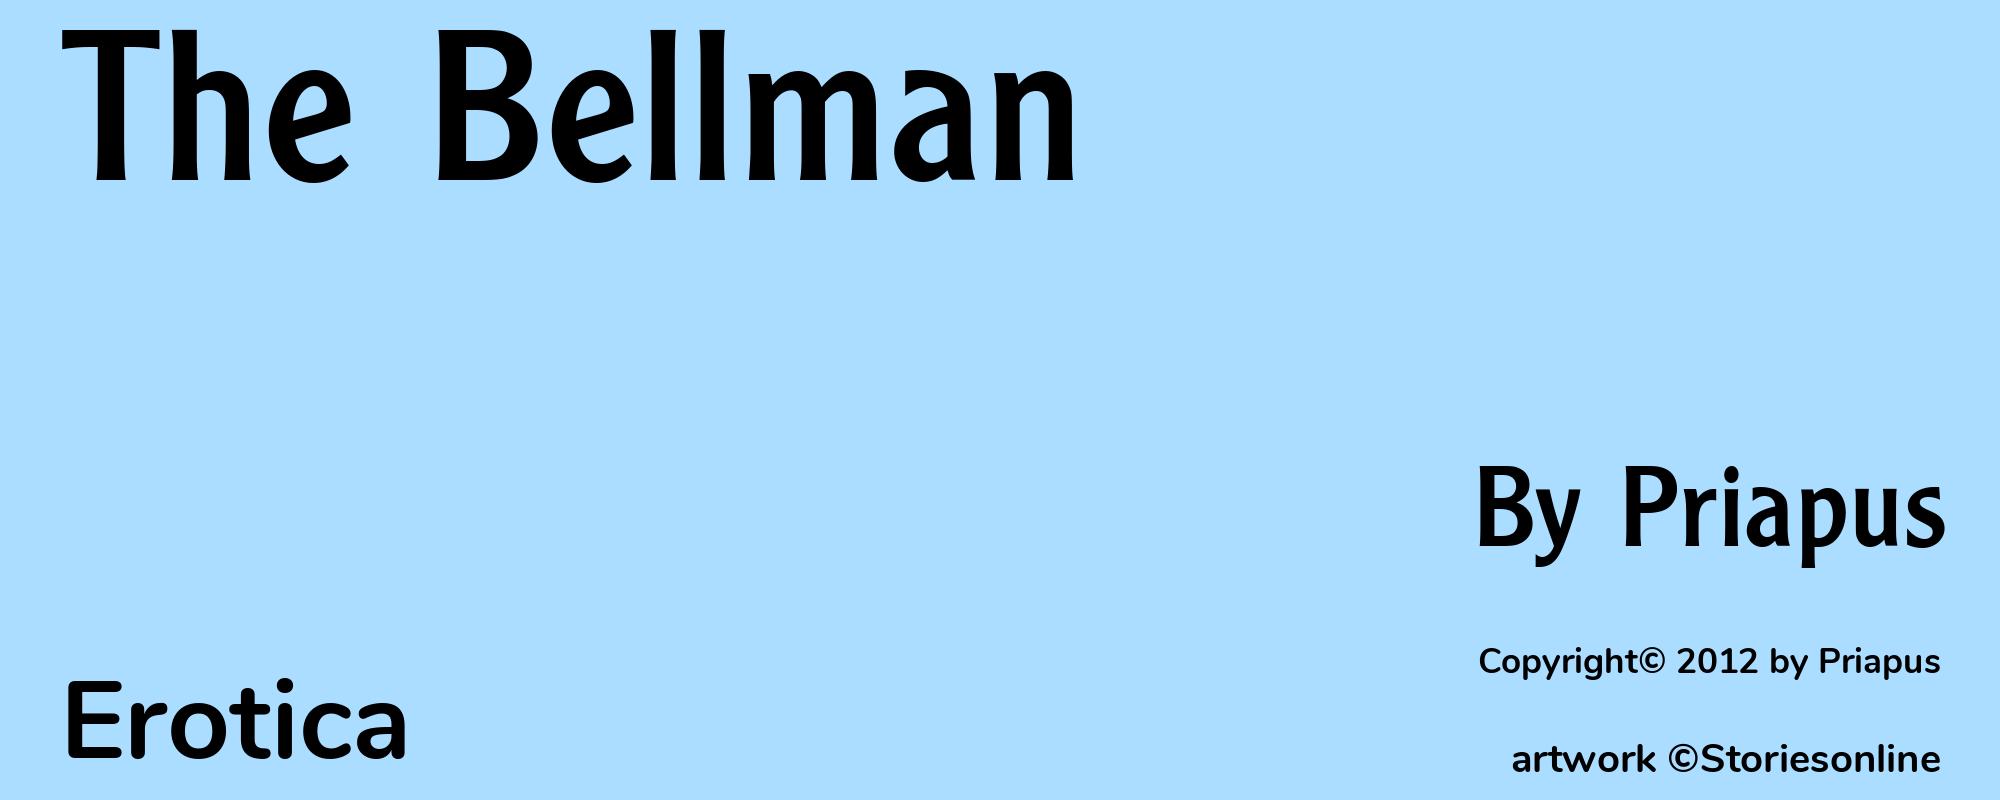 The Bellman - Cover